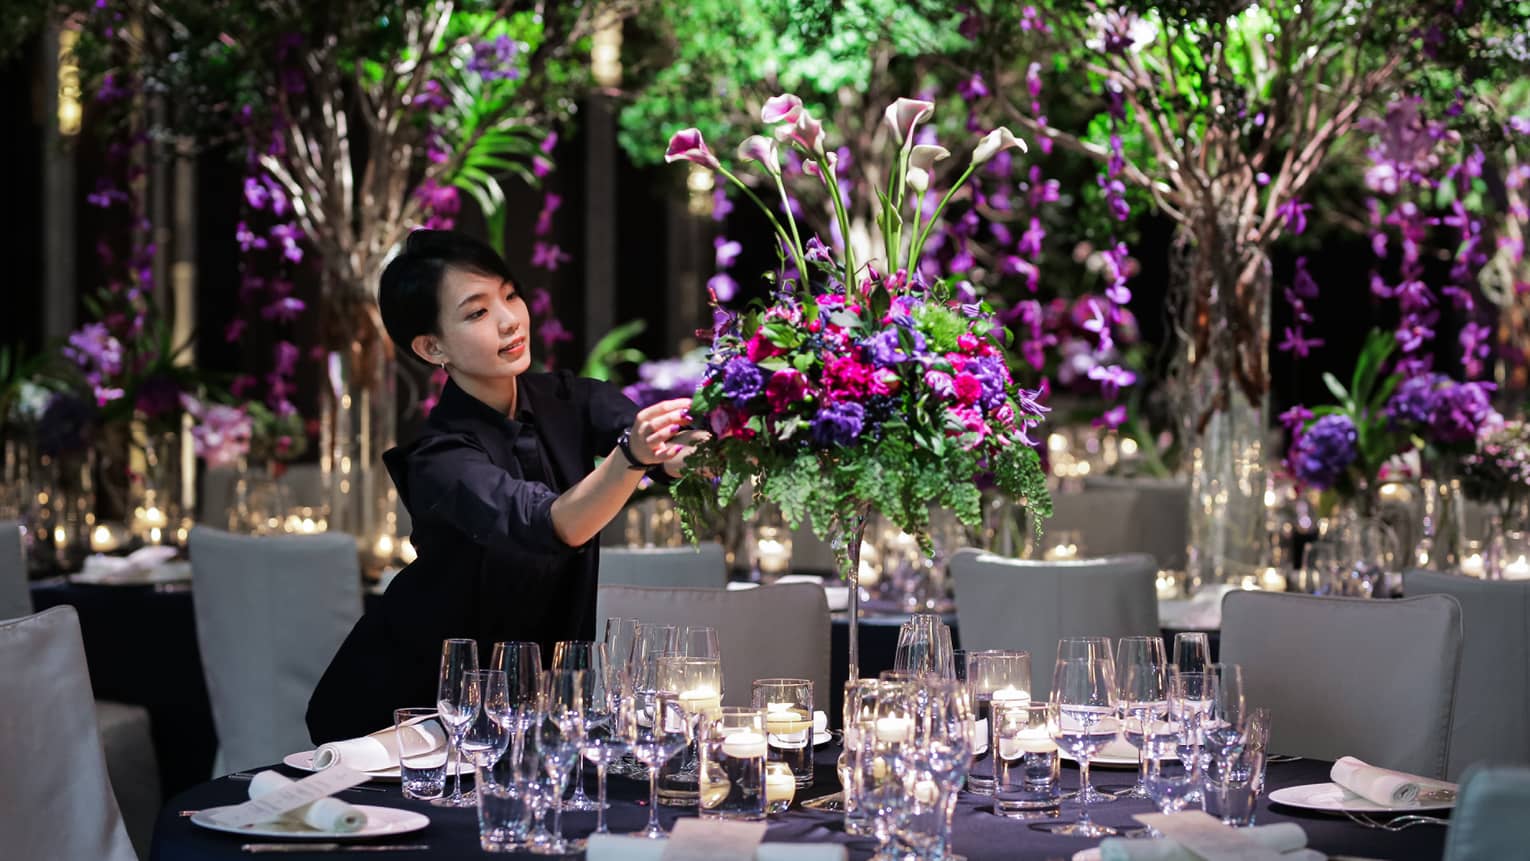 Wedding event staff arranges large floral centrepiece on banquet table